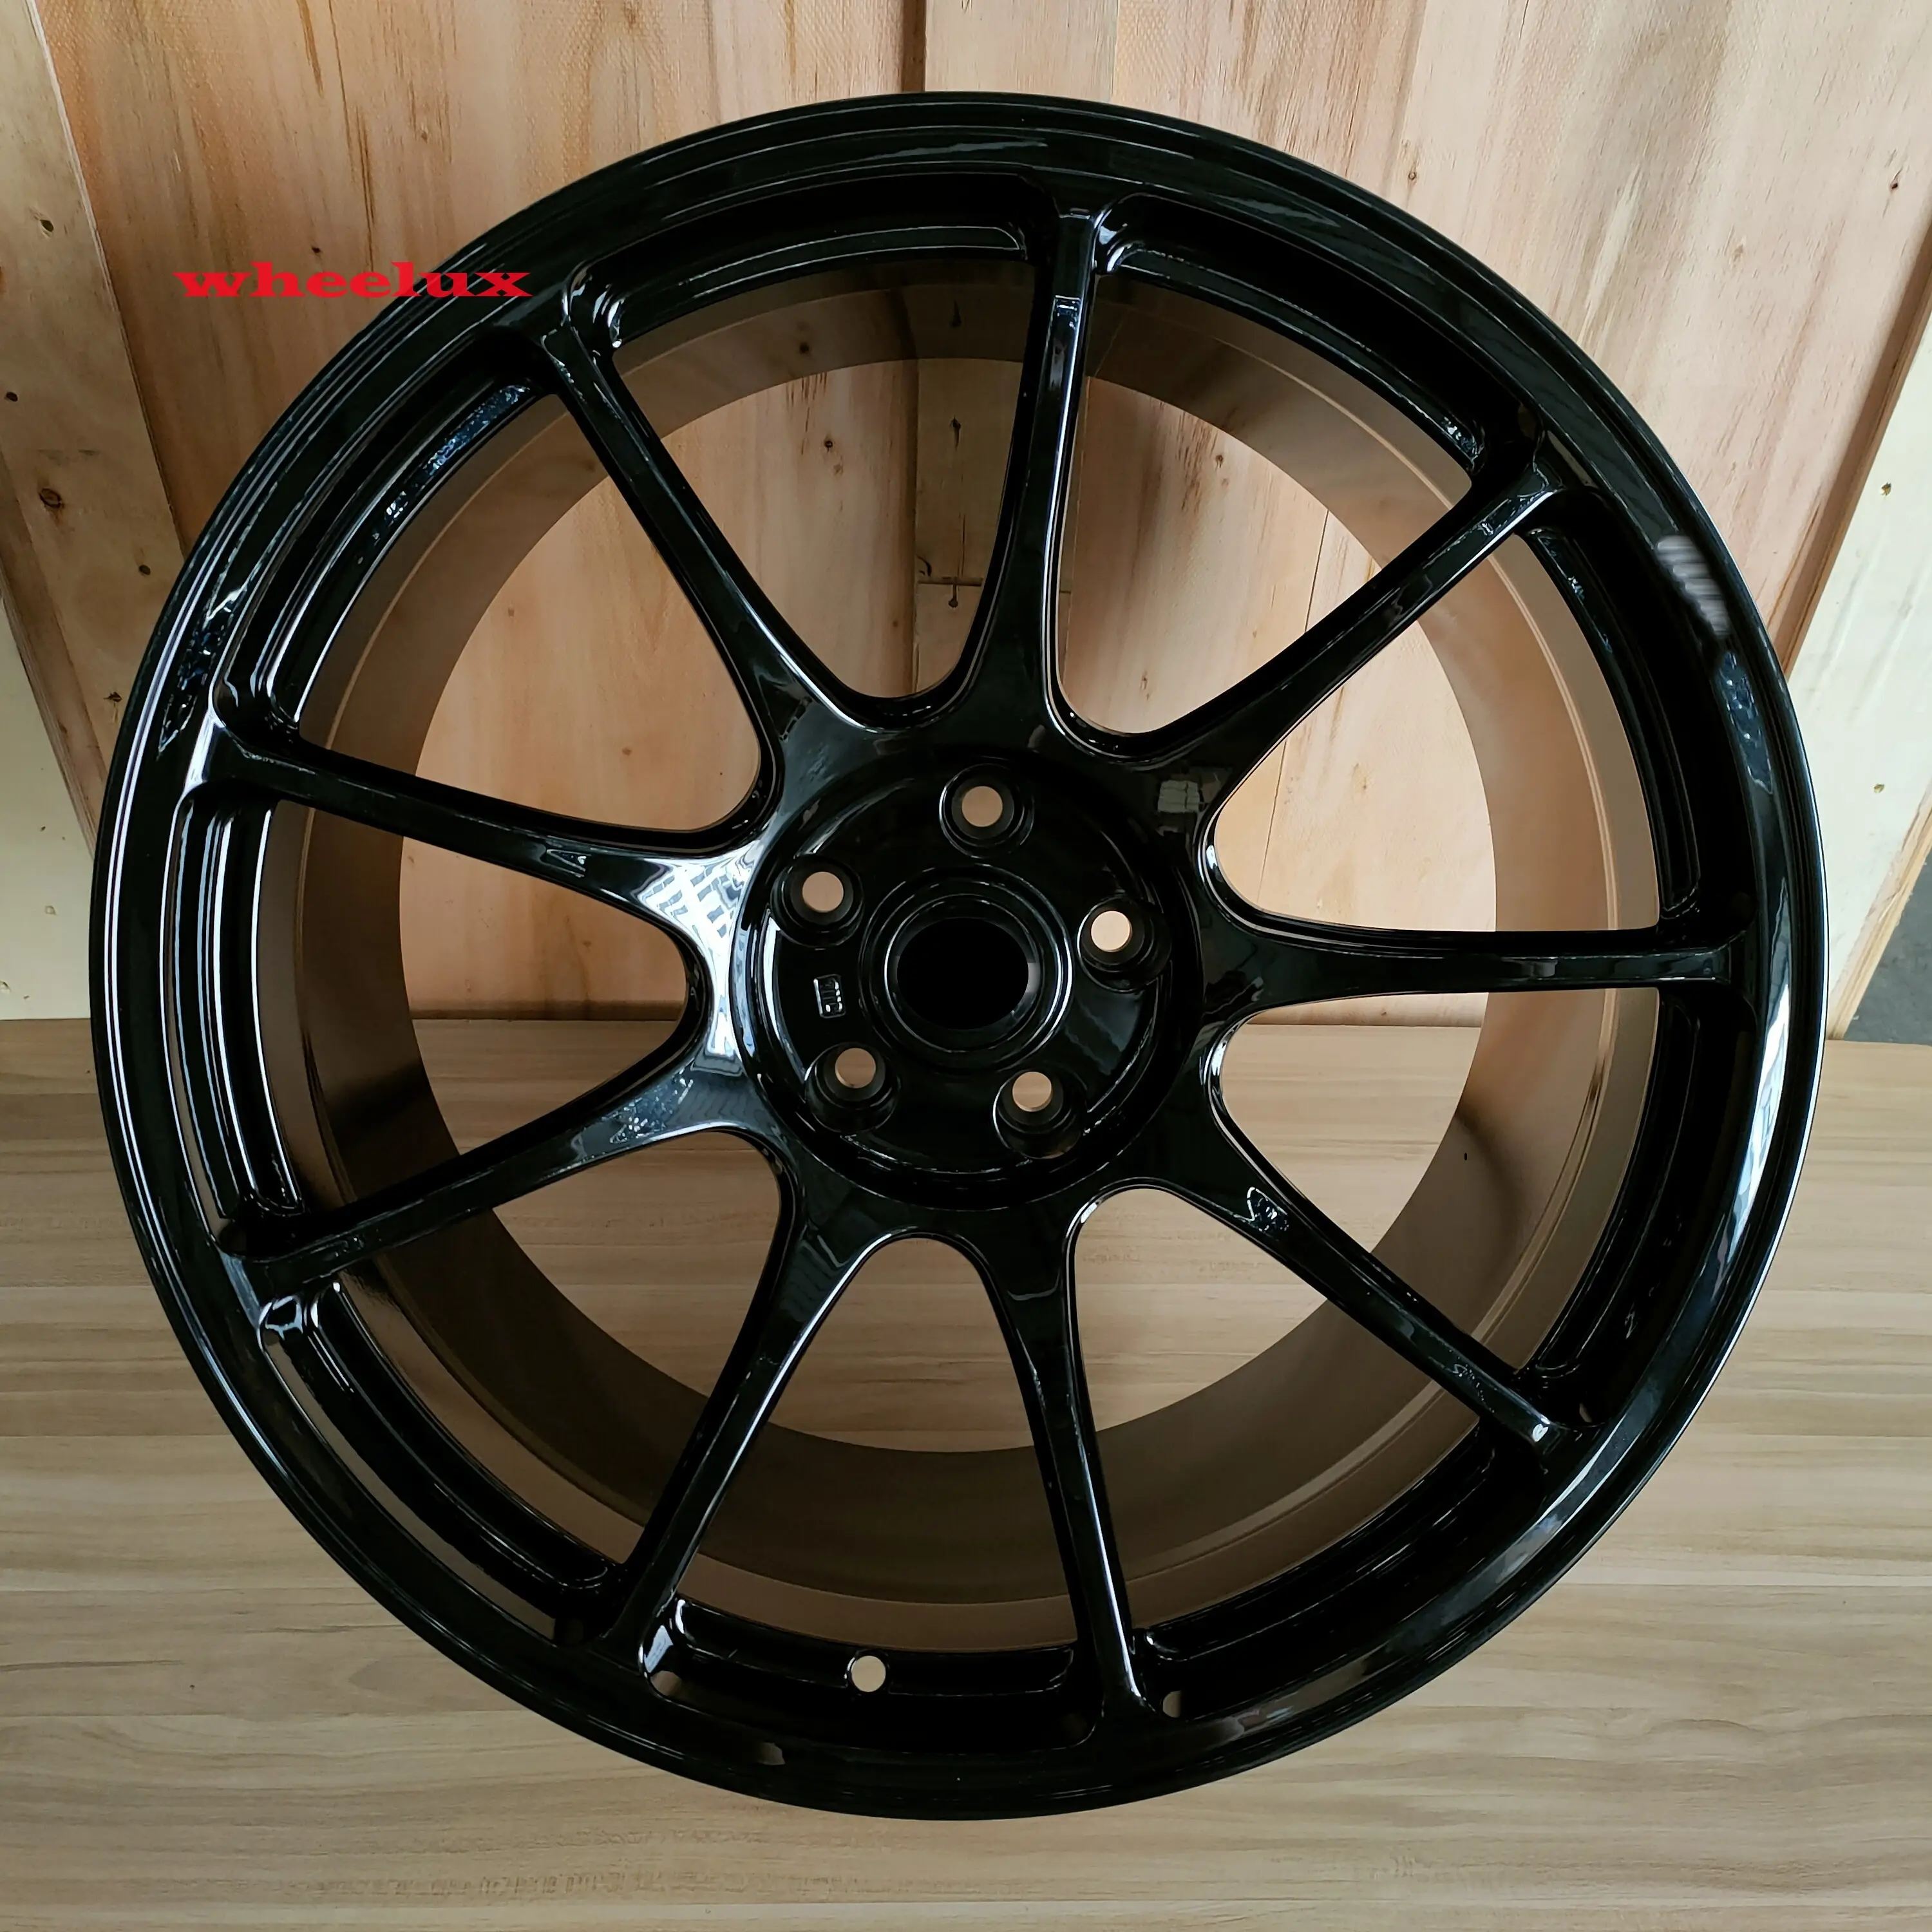 Forged Rims 18 19 20 21 22 23 24 25 26 Inch 5x114.3 5x112 Custom Sport Racing Car Alloy Wheels For Toyota Nissan GT-R Acura NSX